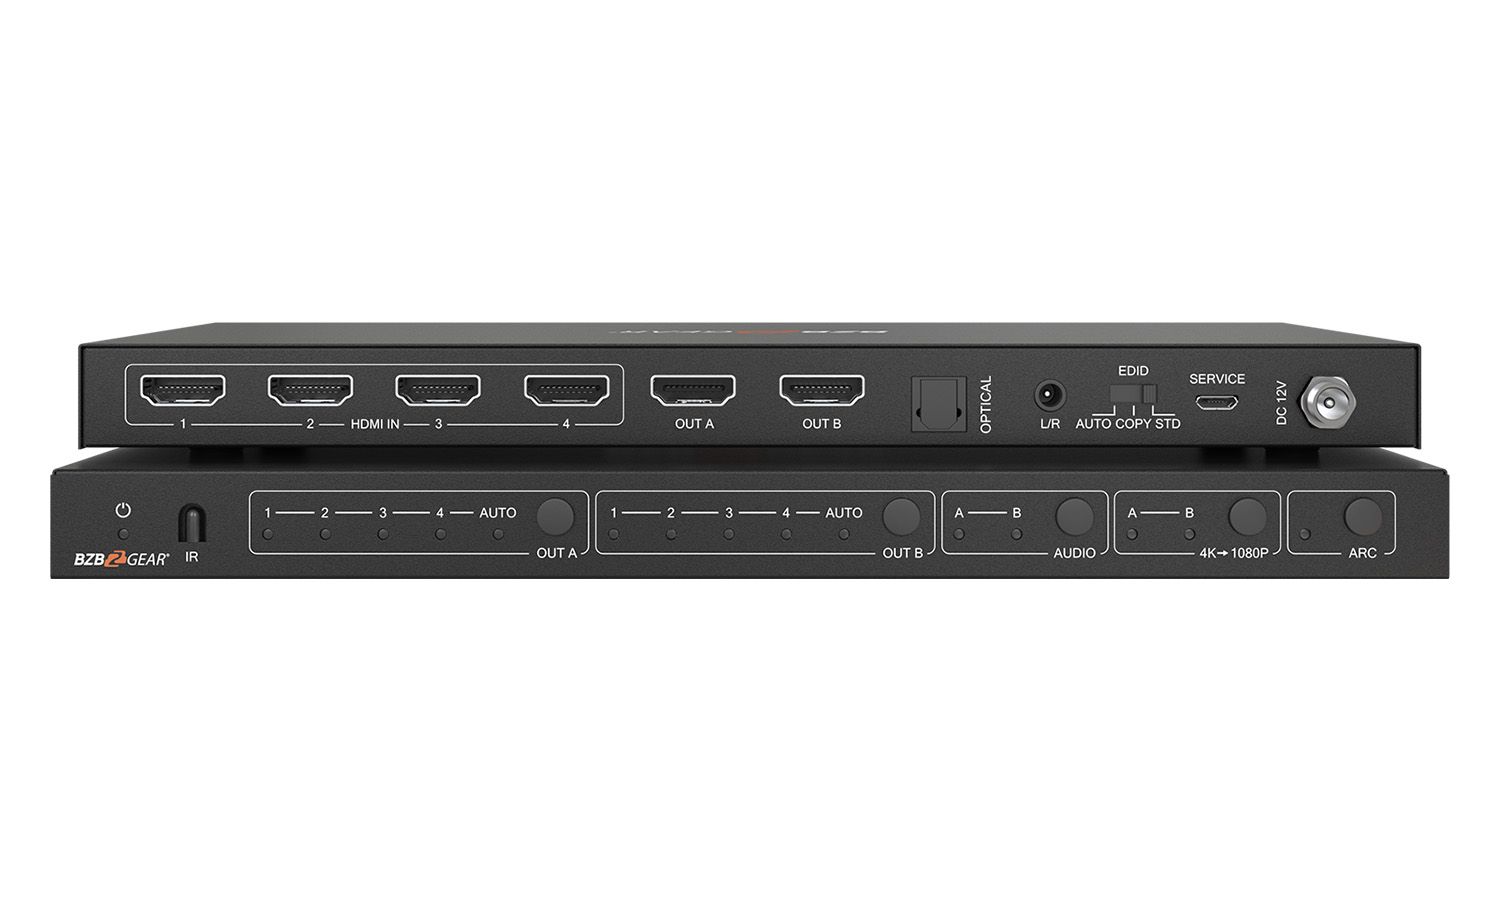 BZBGEAR BG-UHD-42M 4x2 4K UHD HDMI Matrix Switcher with Audio/Downscaling Support